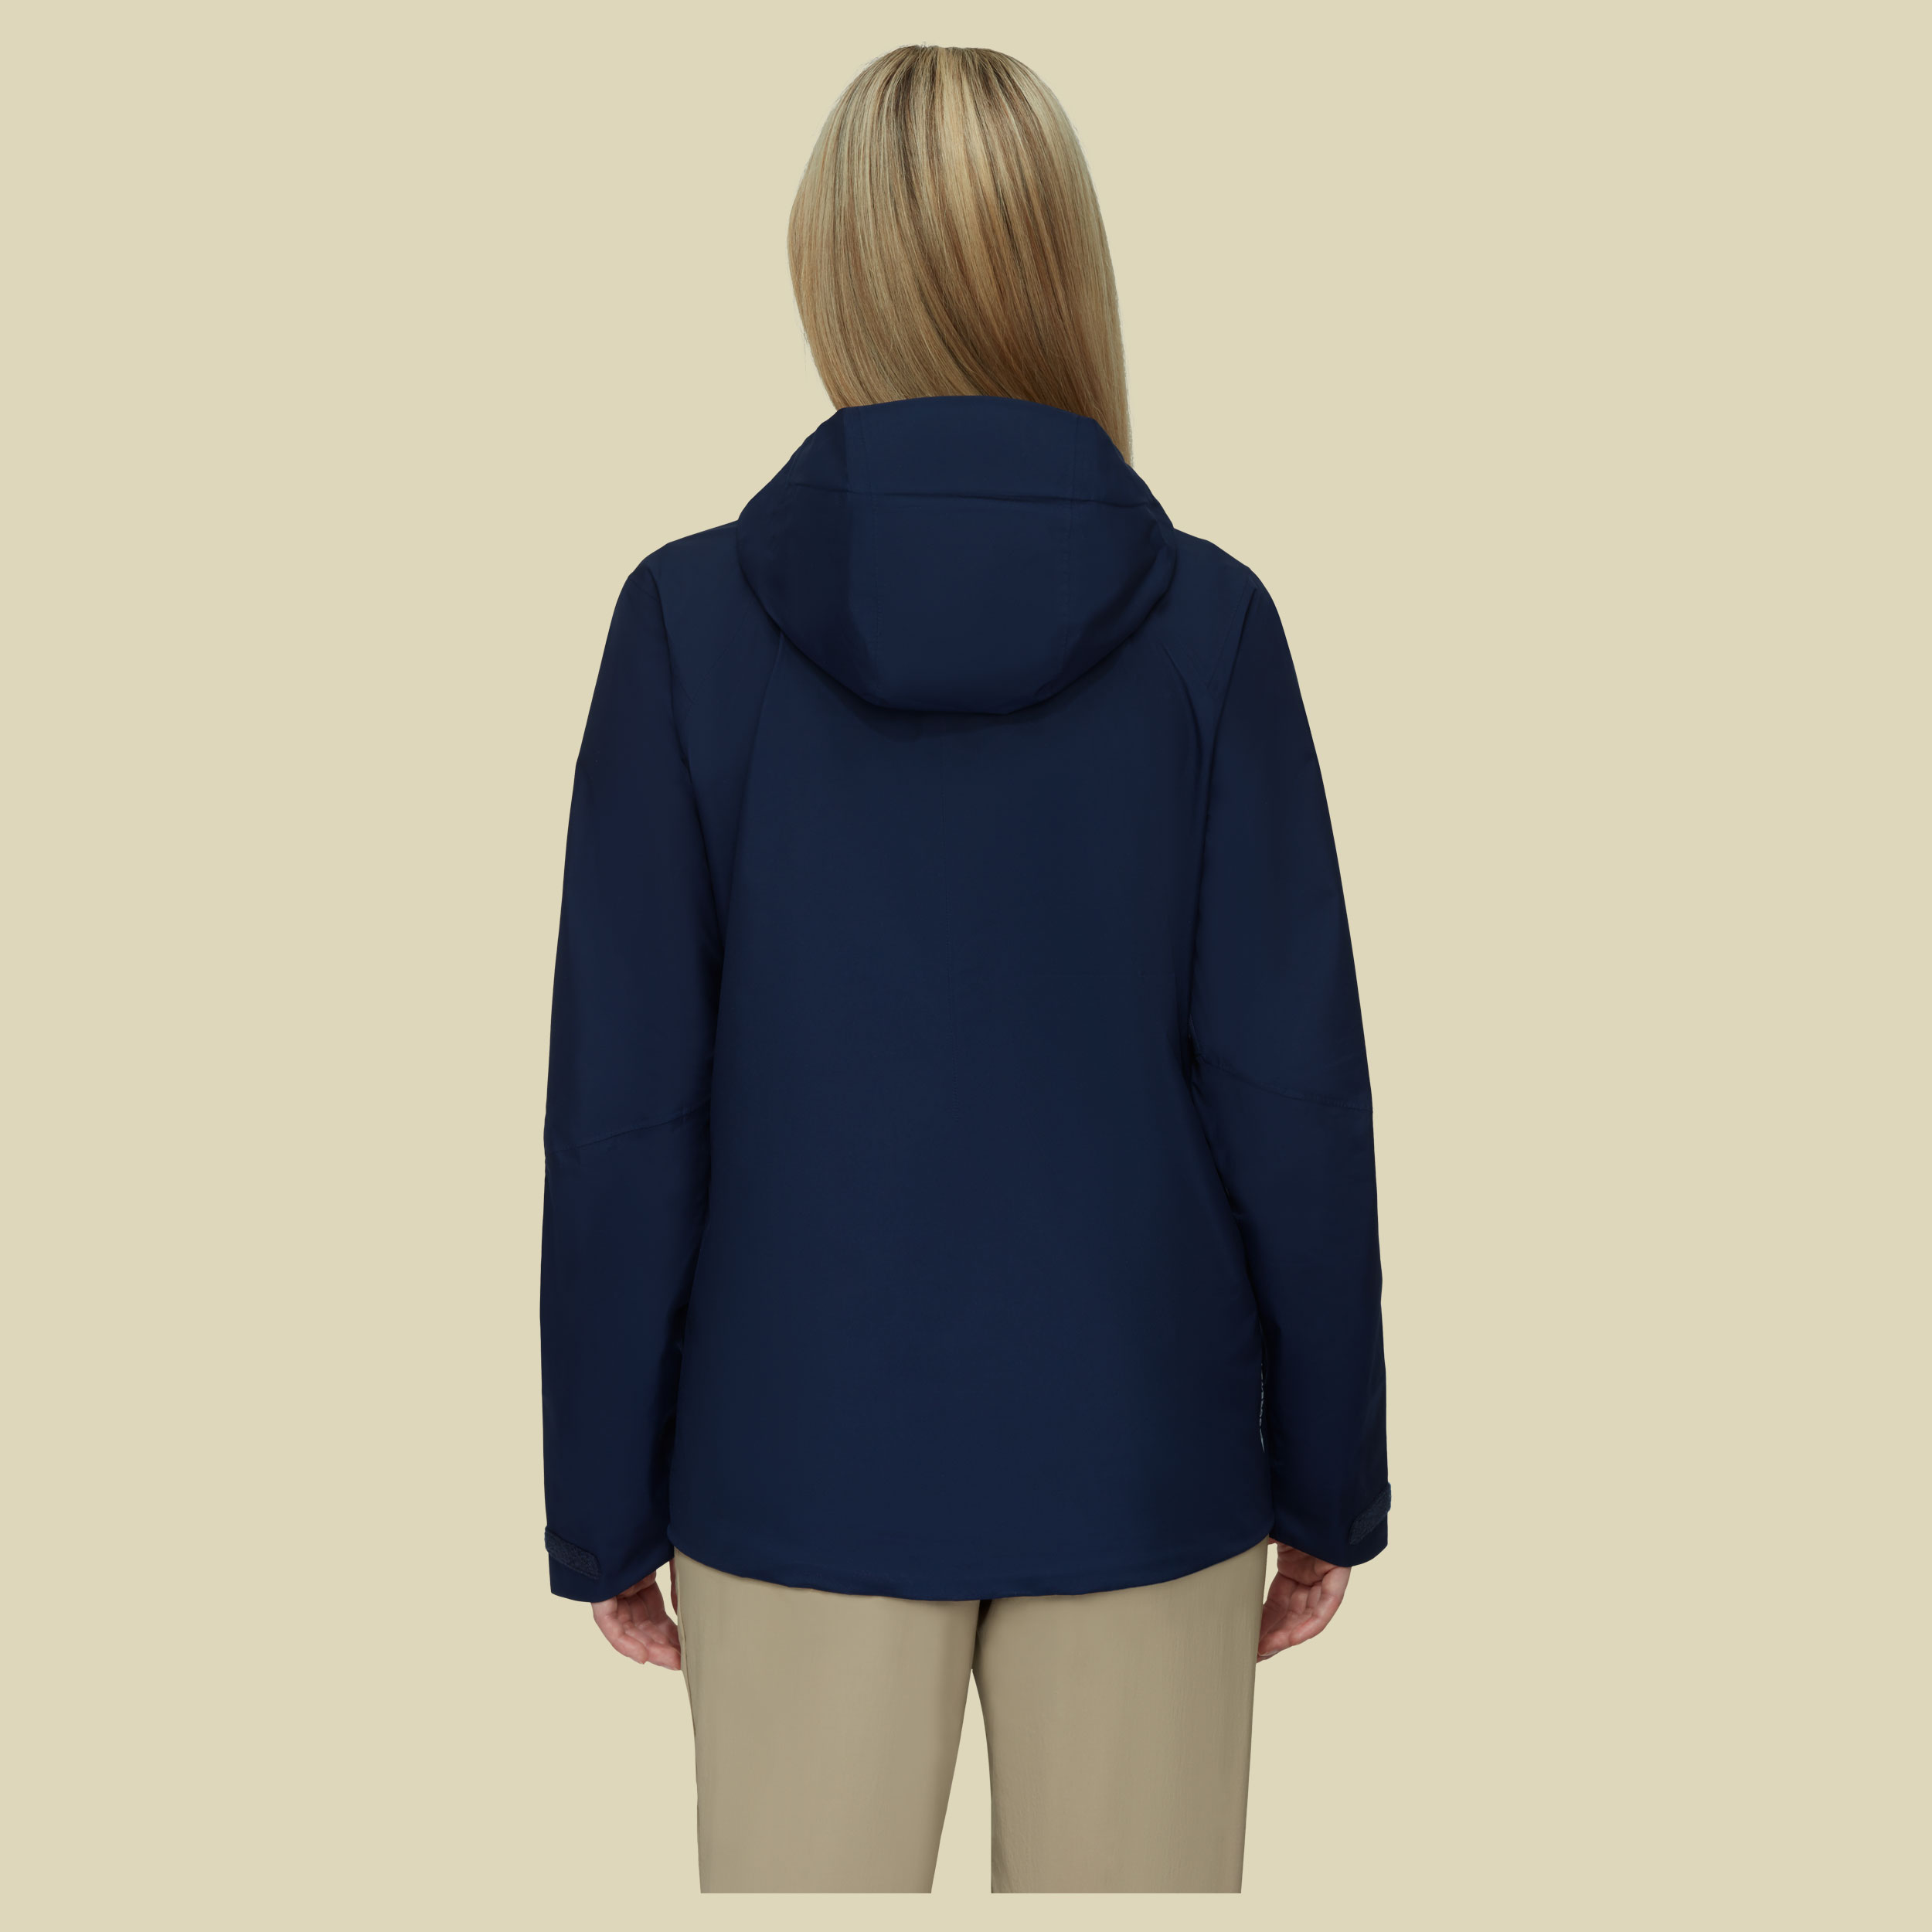 Convey Tour HS Hooded Jacket Women Größe XS Farbe marine